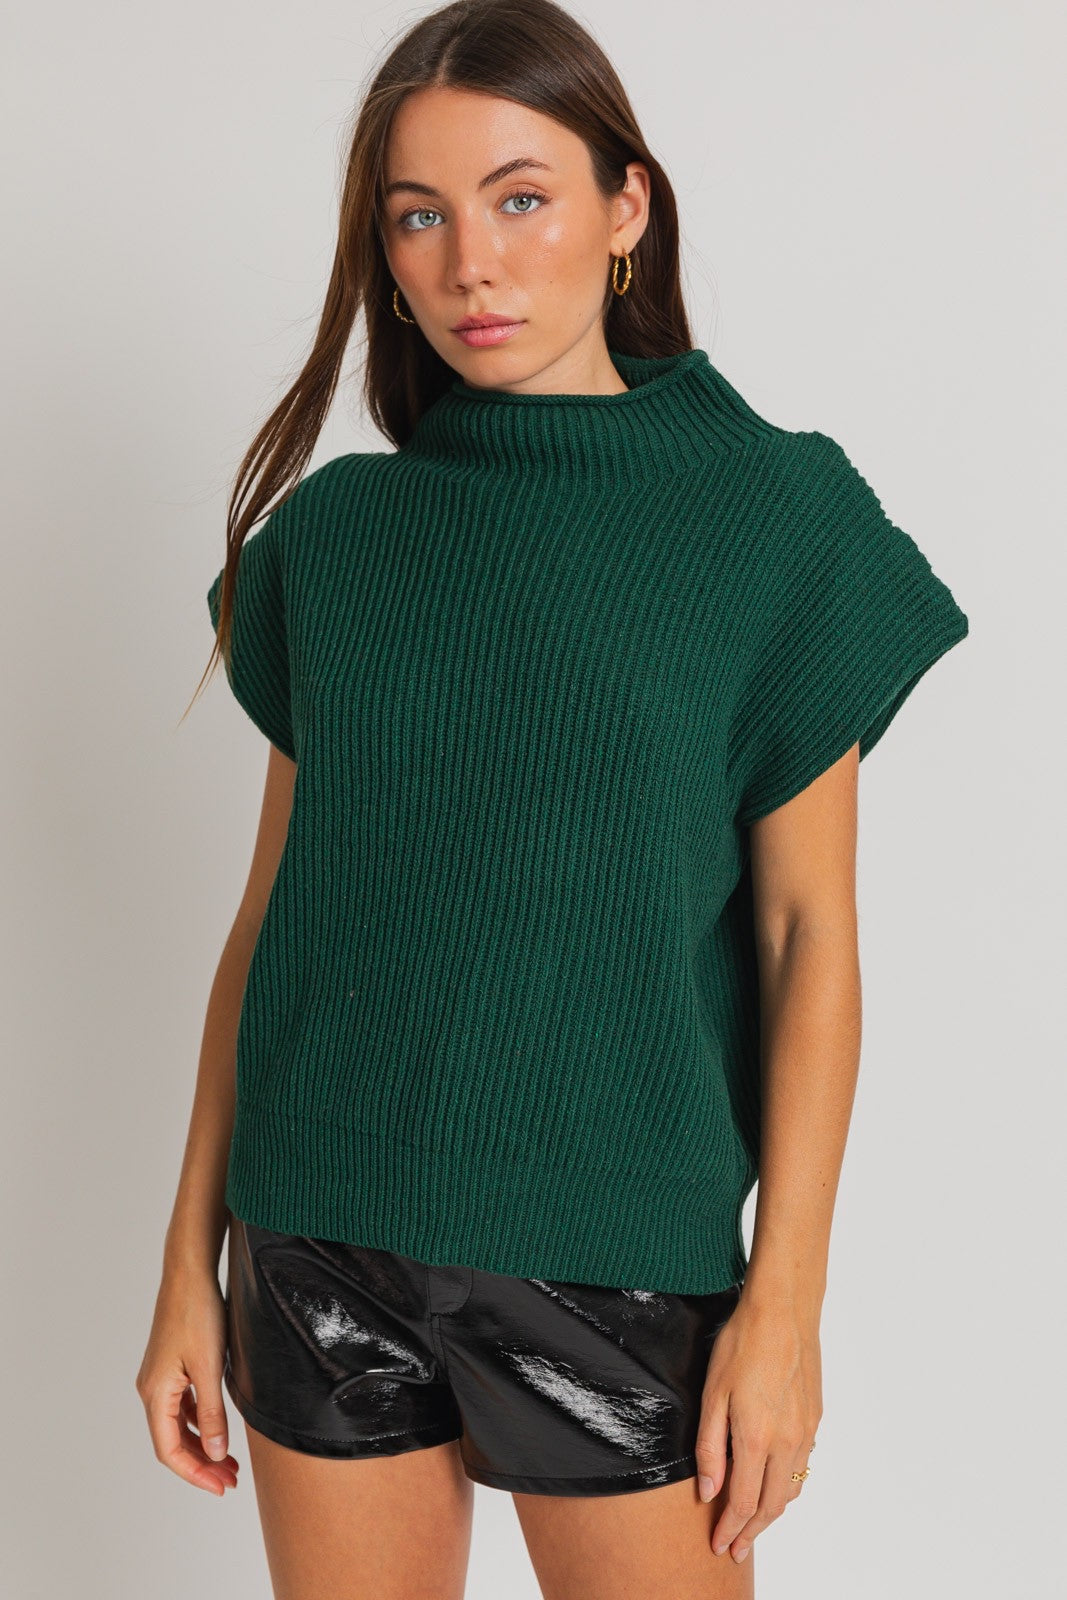 Cap Sleeve Sweater PREORDER 10/20